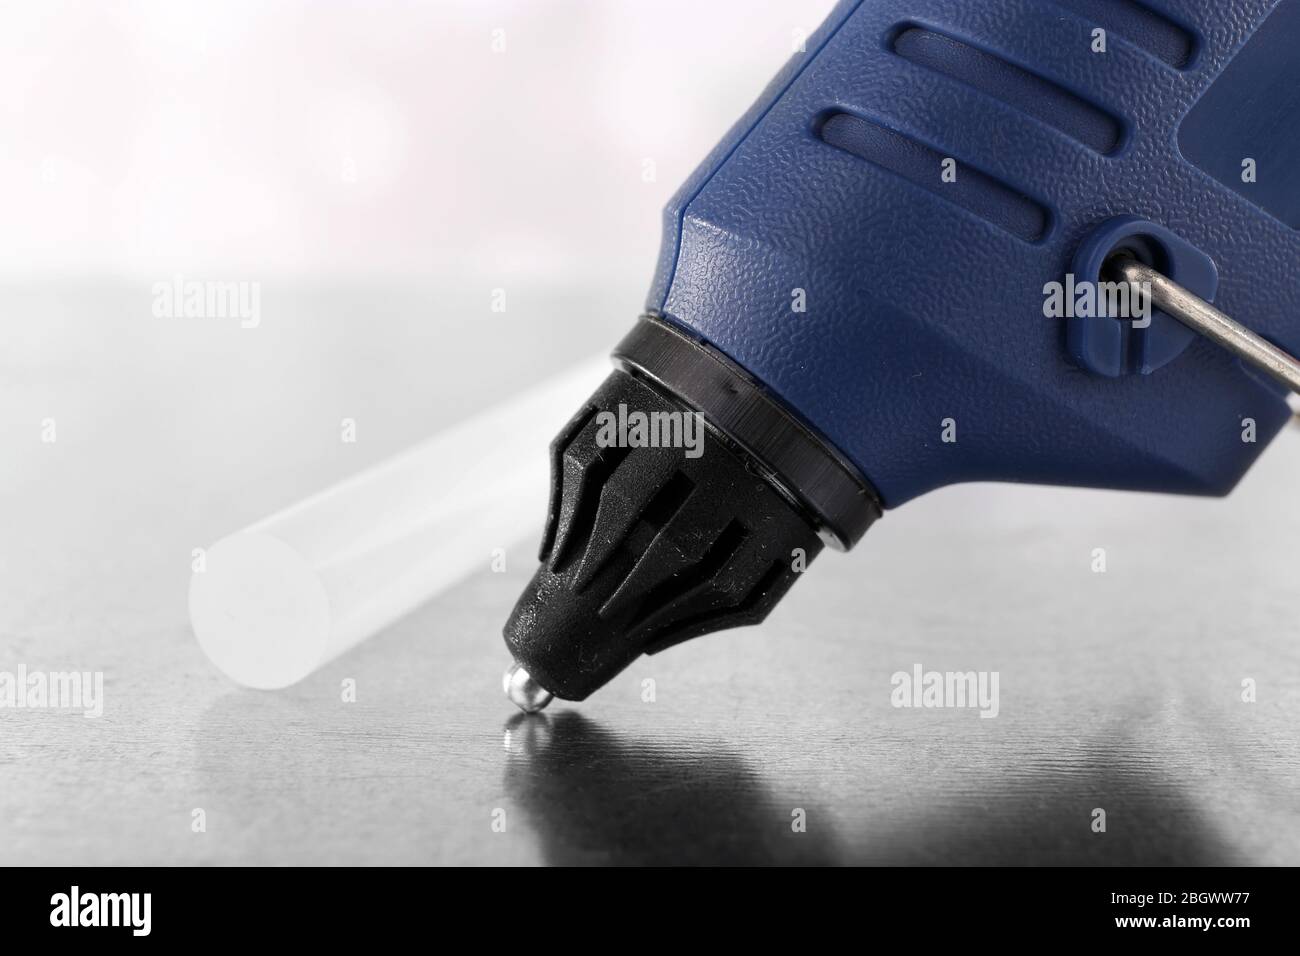 Dark blue glue gun and silicone stick on light background Stock Photo